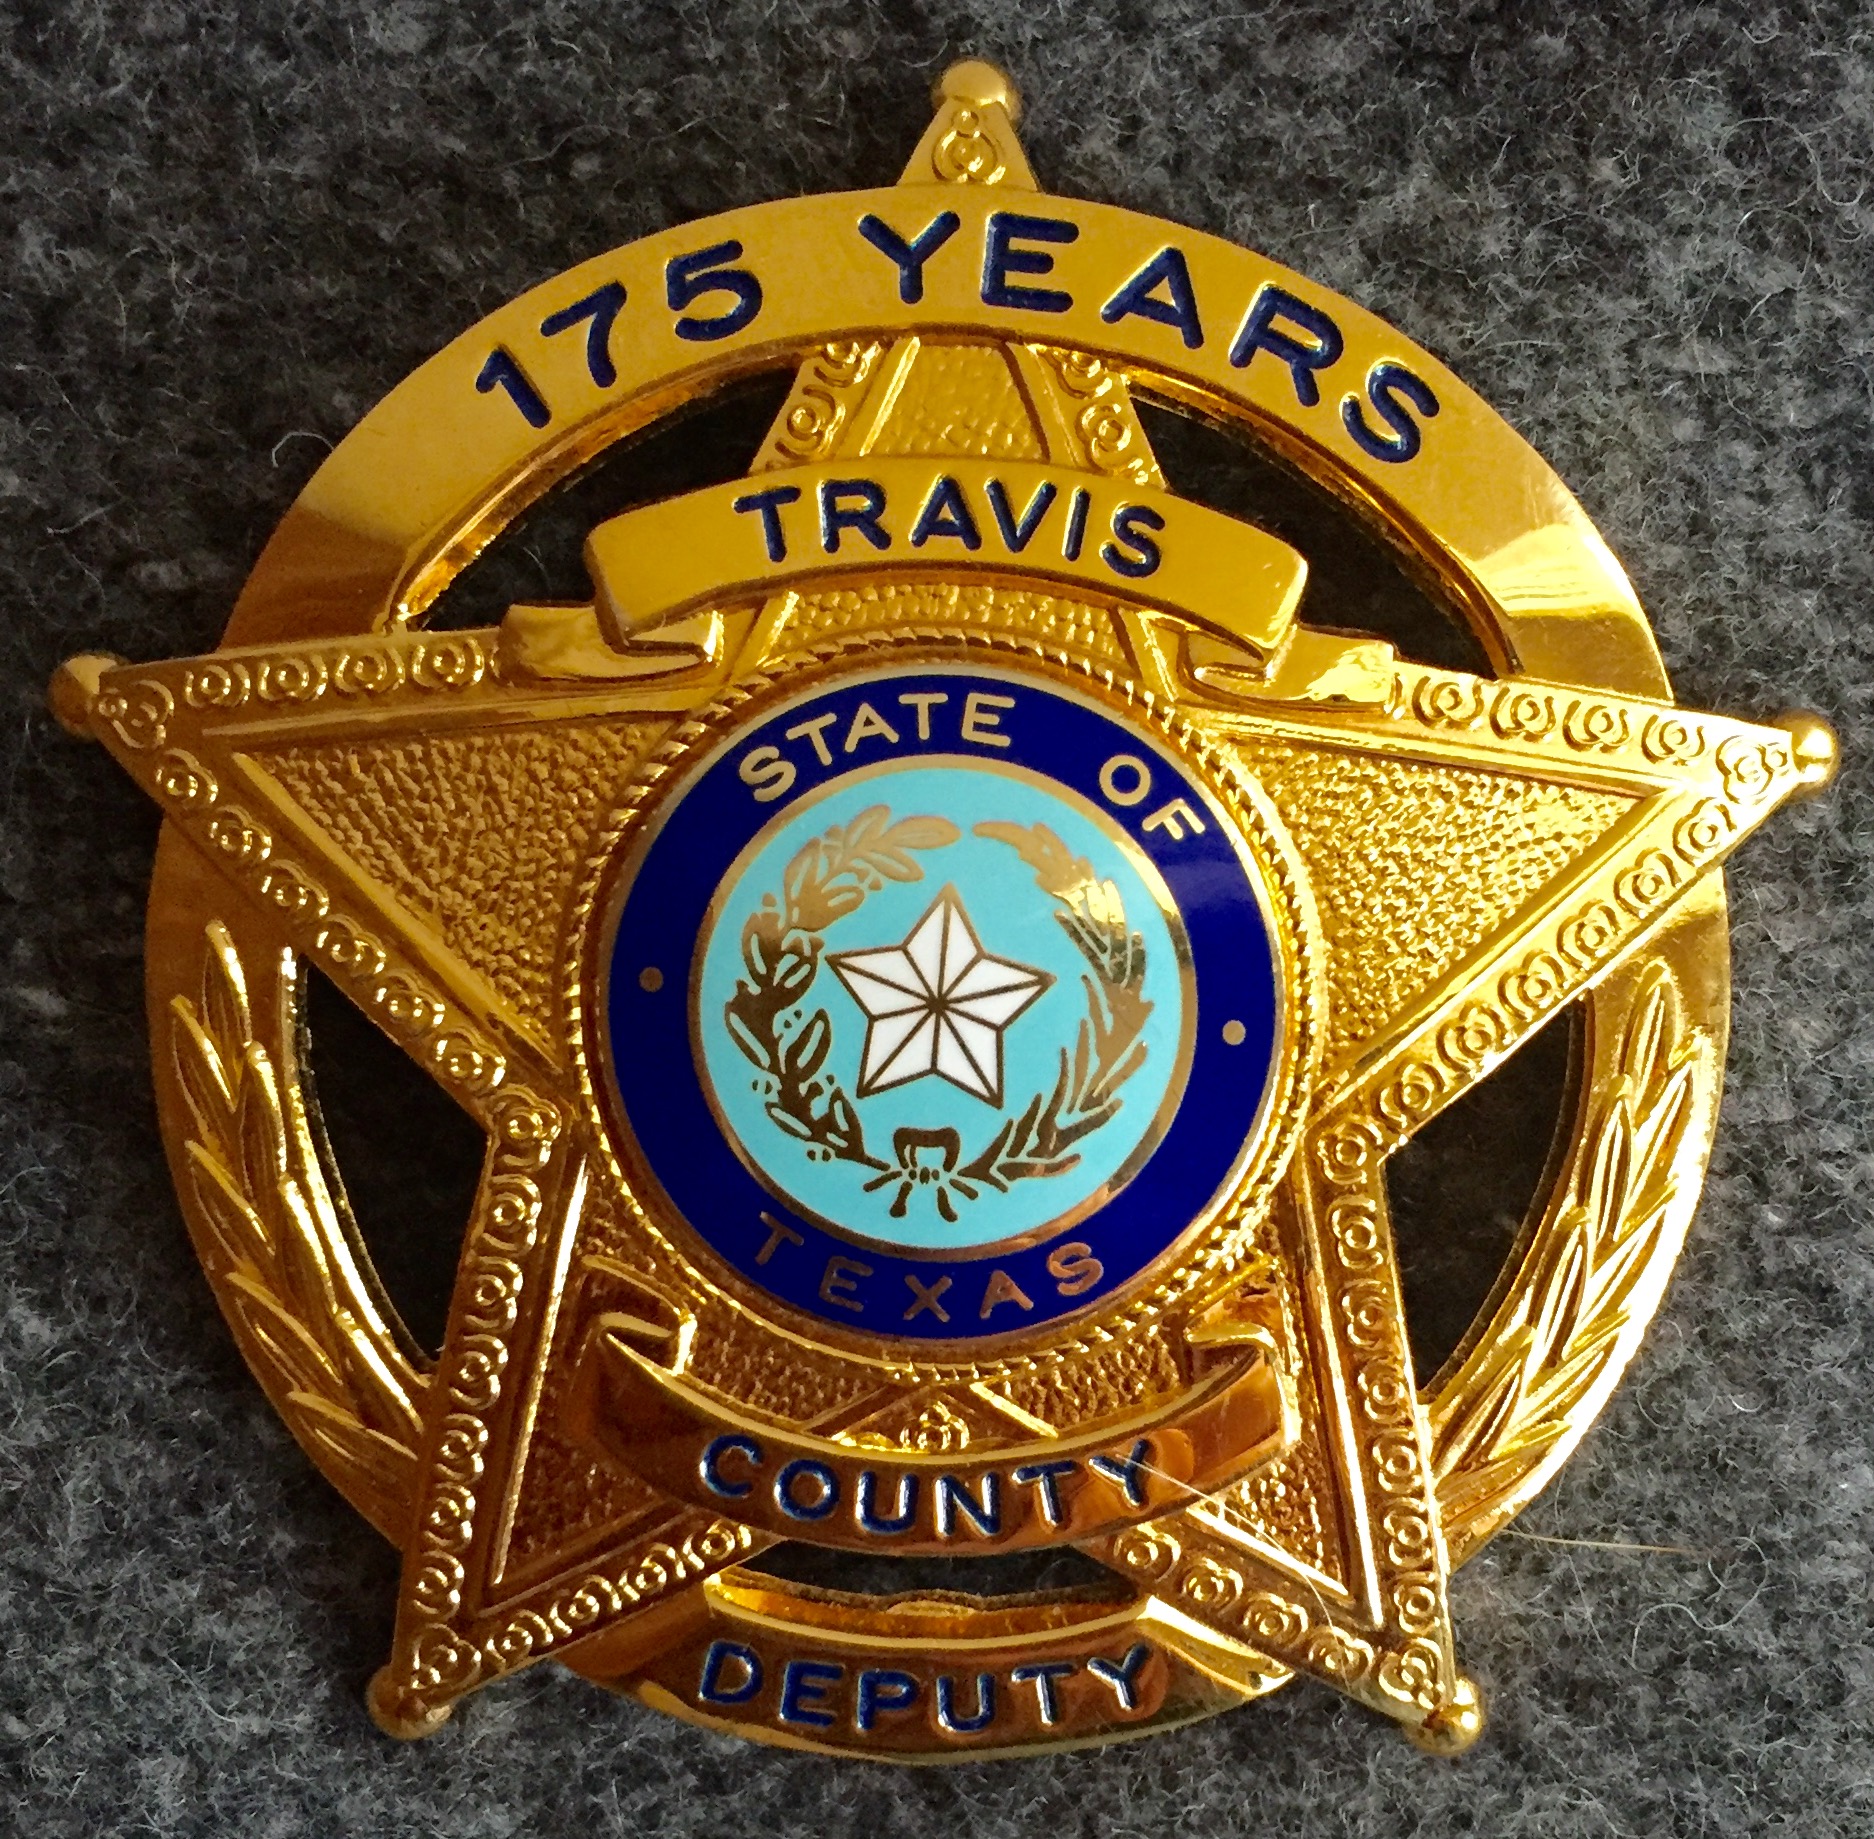 Travis County 175 Years Commemorative Badge